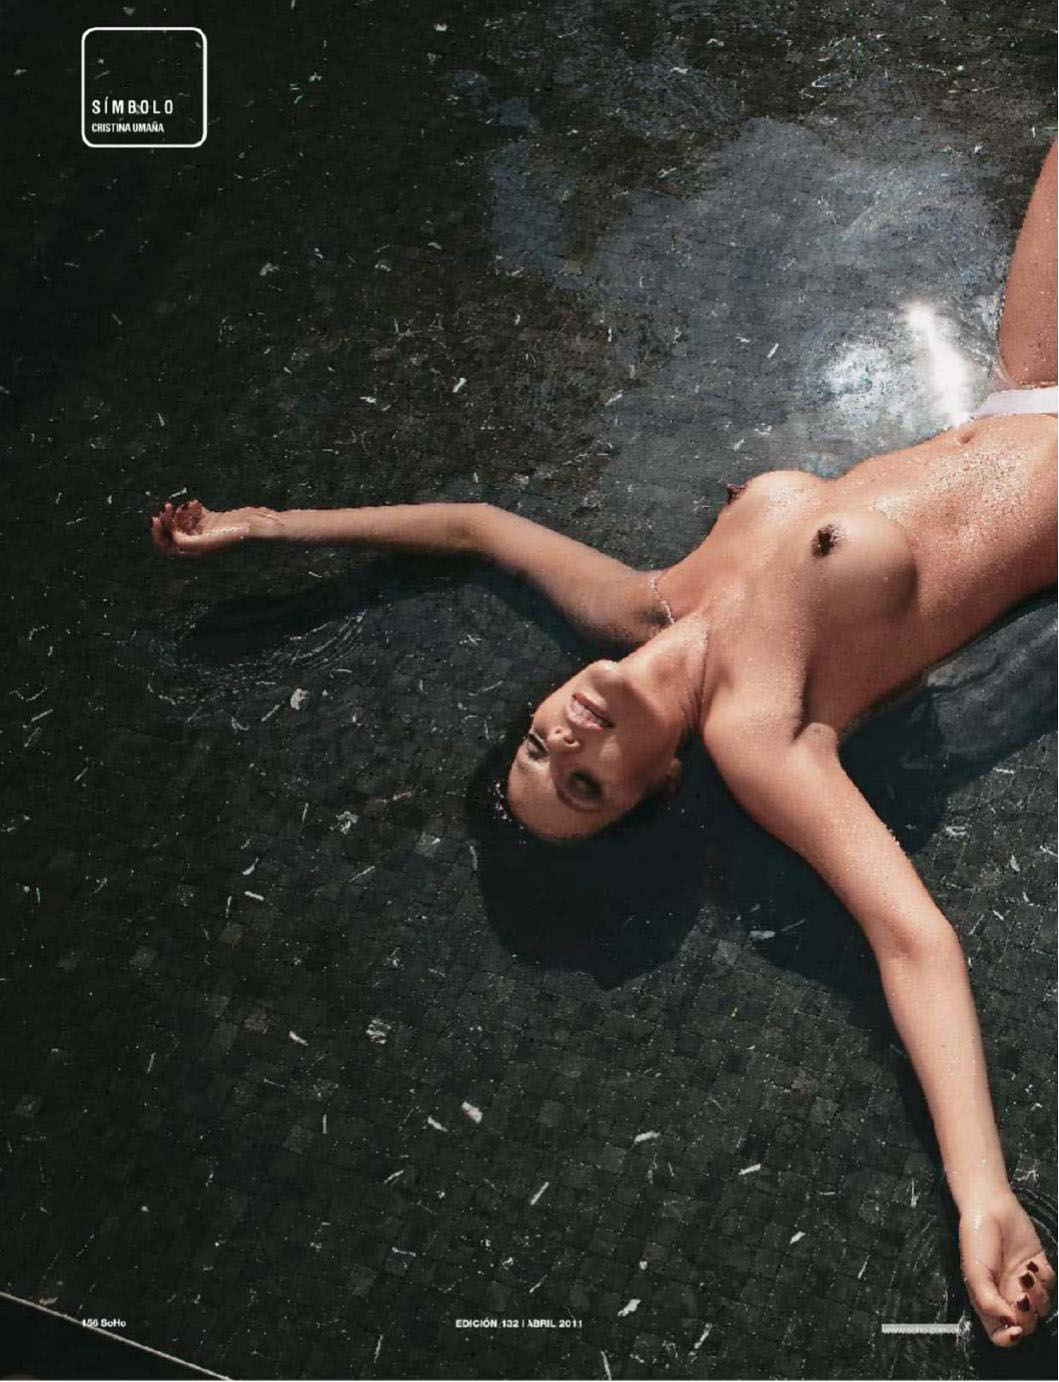 Cristina umana naked